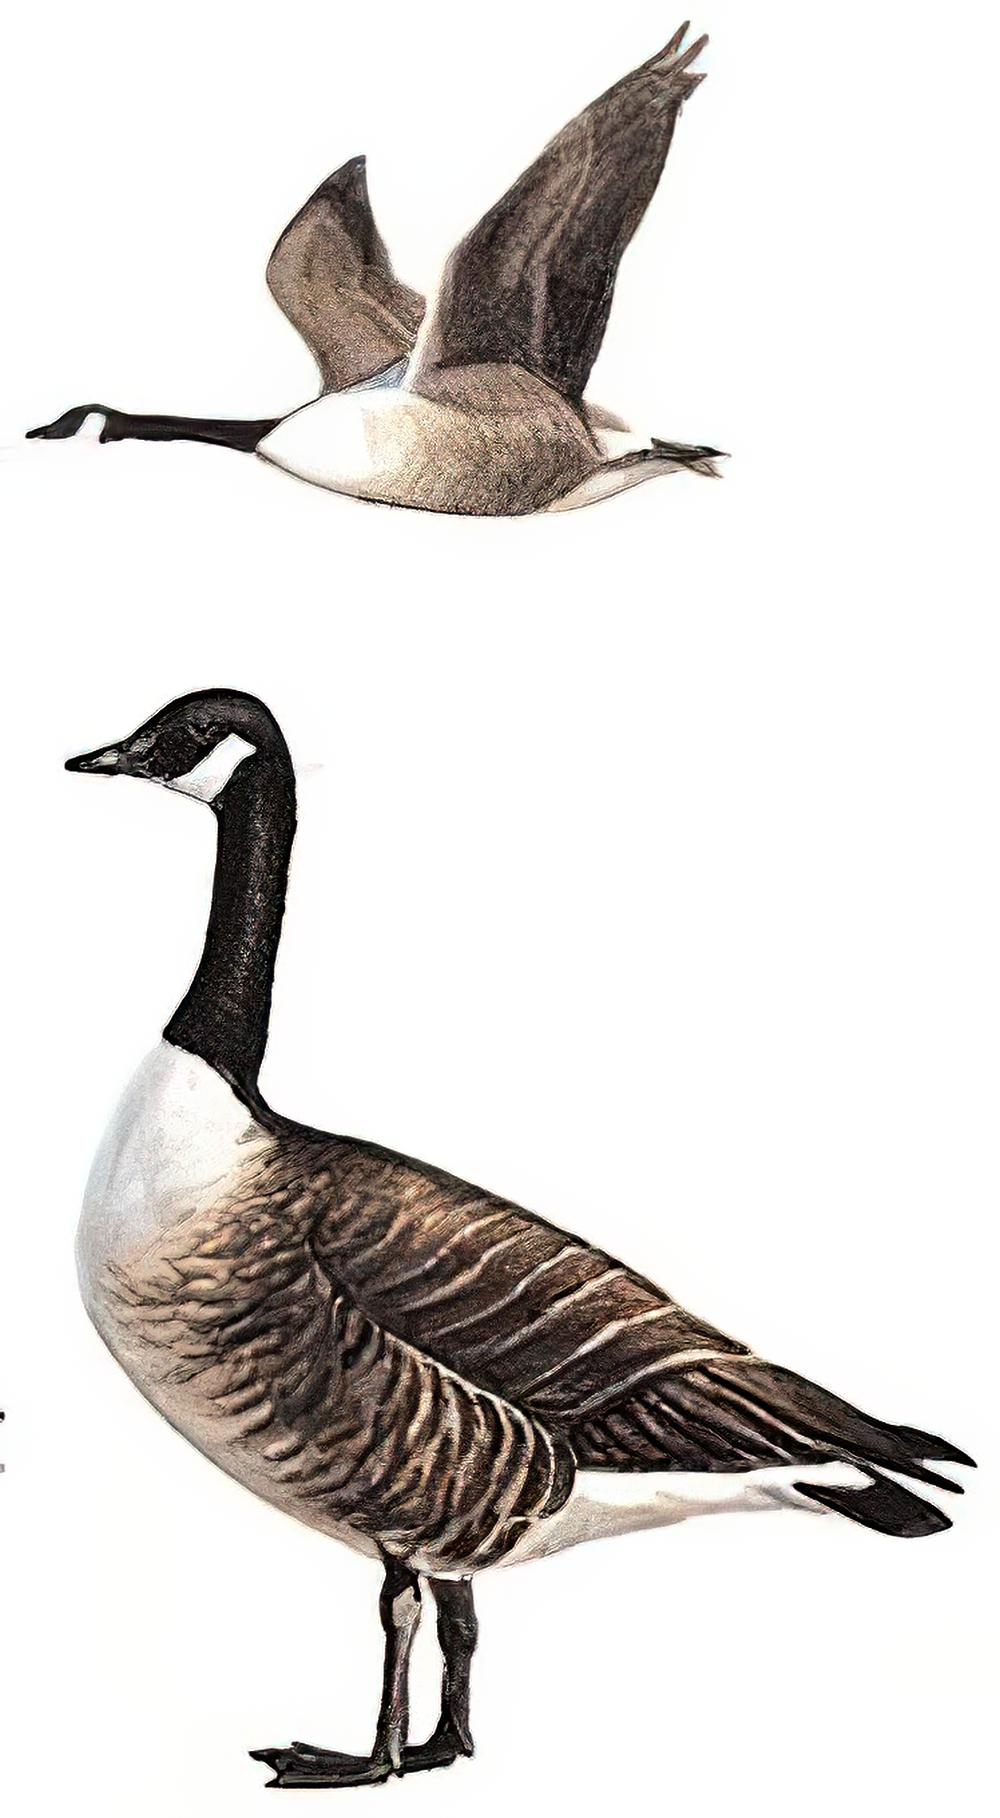 加拿大黑雁 / Canada Goose / Branta canadensis